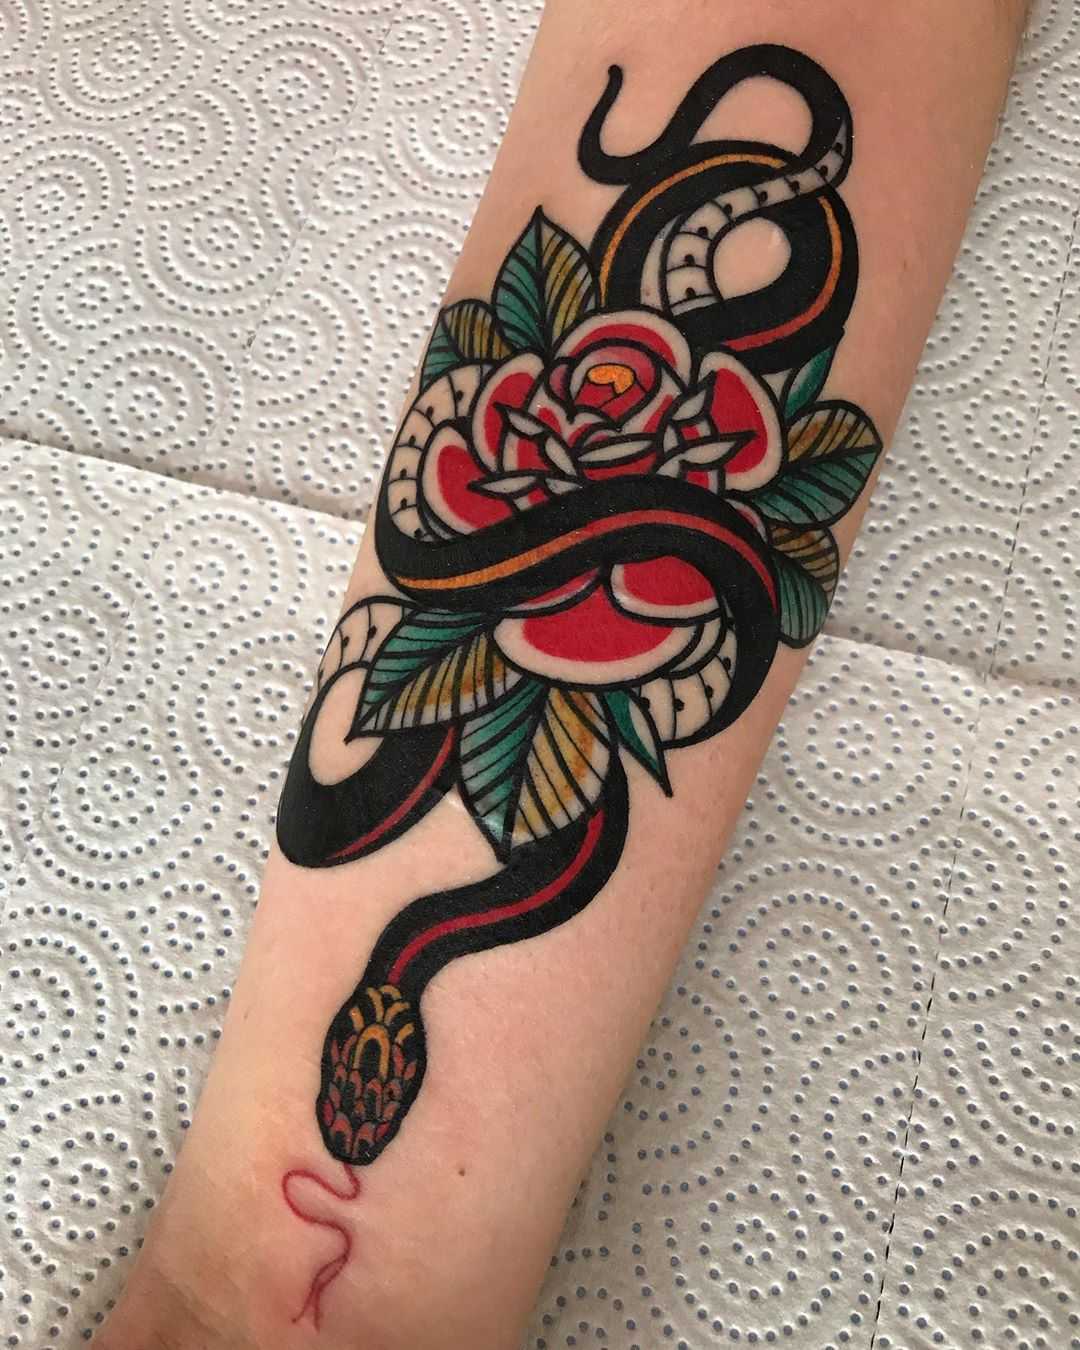 Snake and rose by tattooist Alejo GMZ